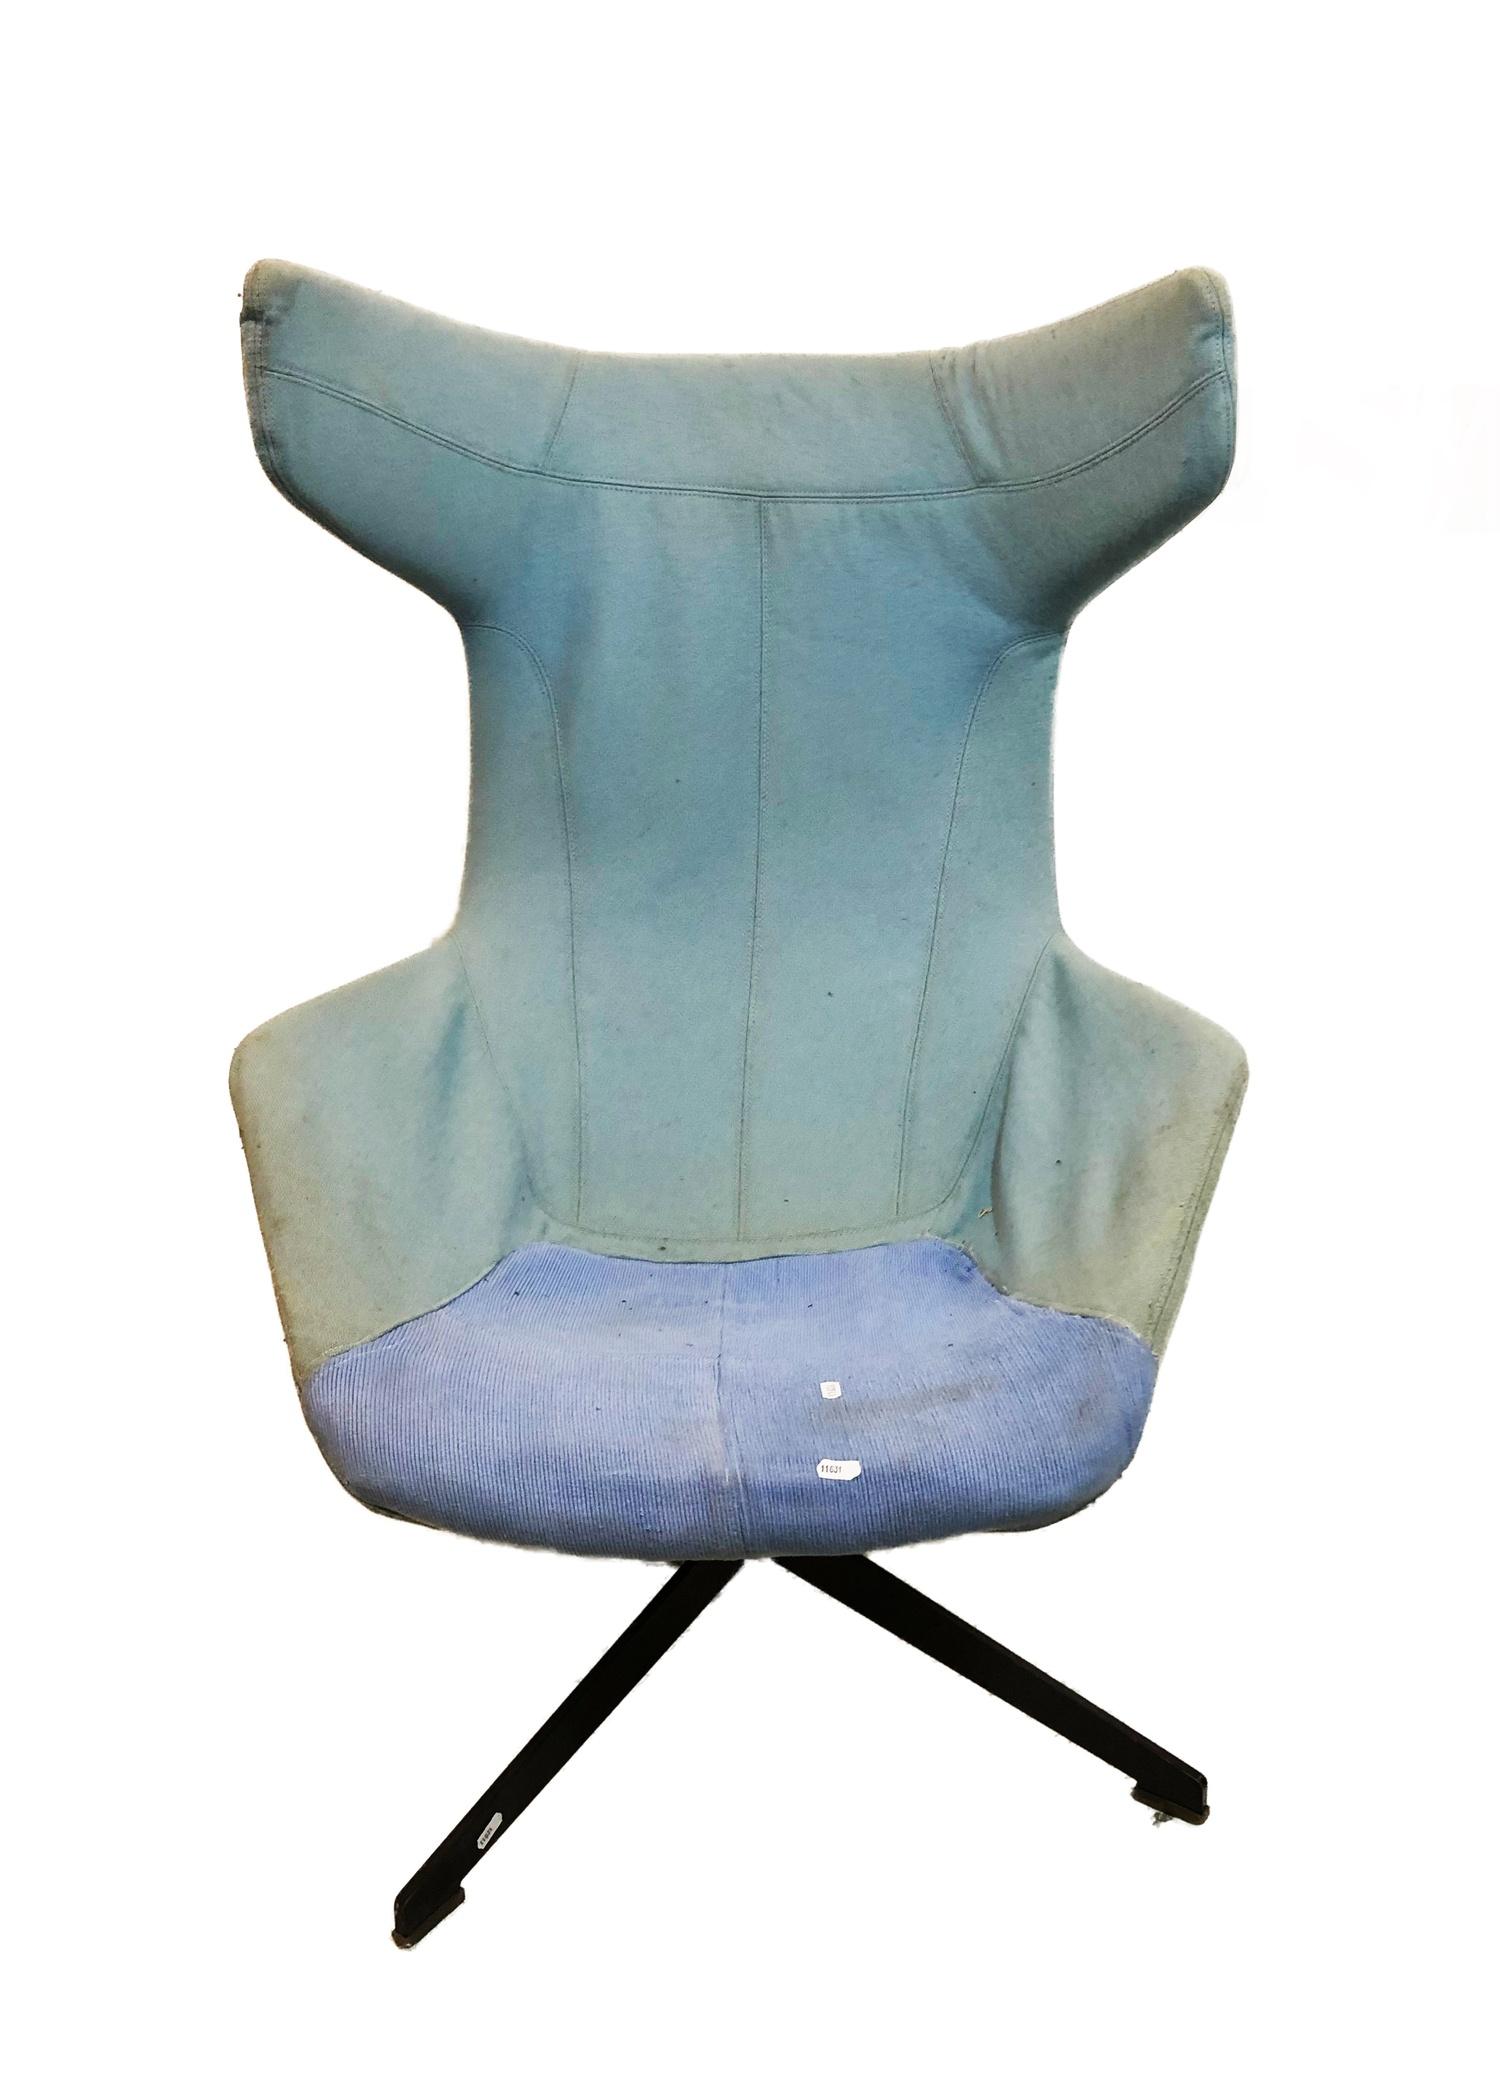 Alfredo Haberli 'Take A Line For A Walk' Chair on 4 spoke swivel base, fabric upholstery (possibly